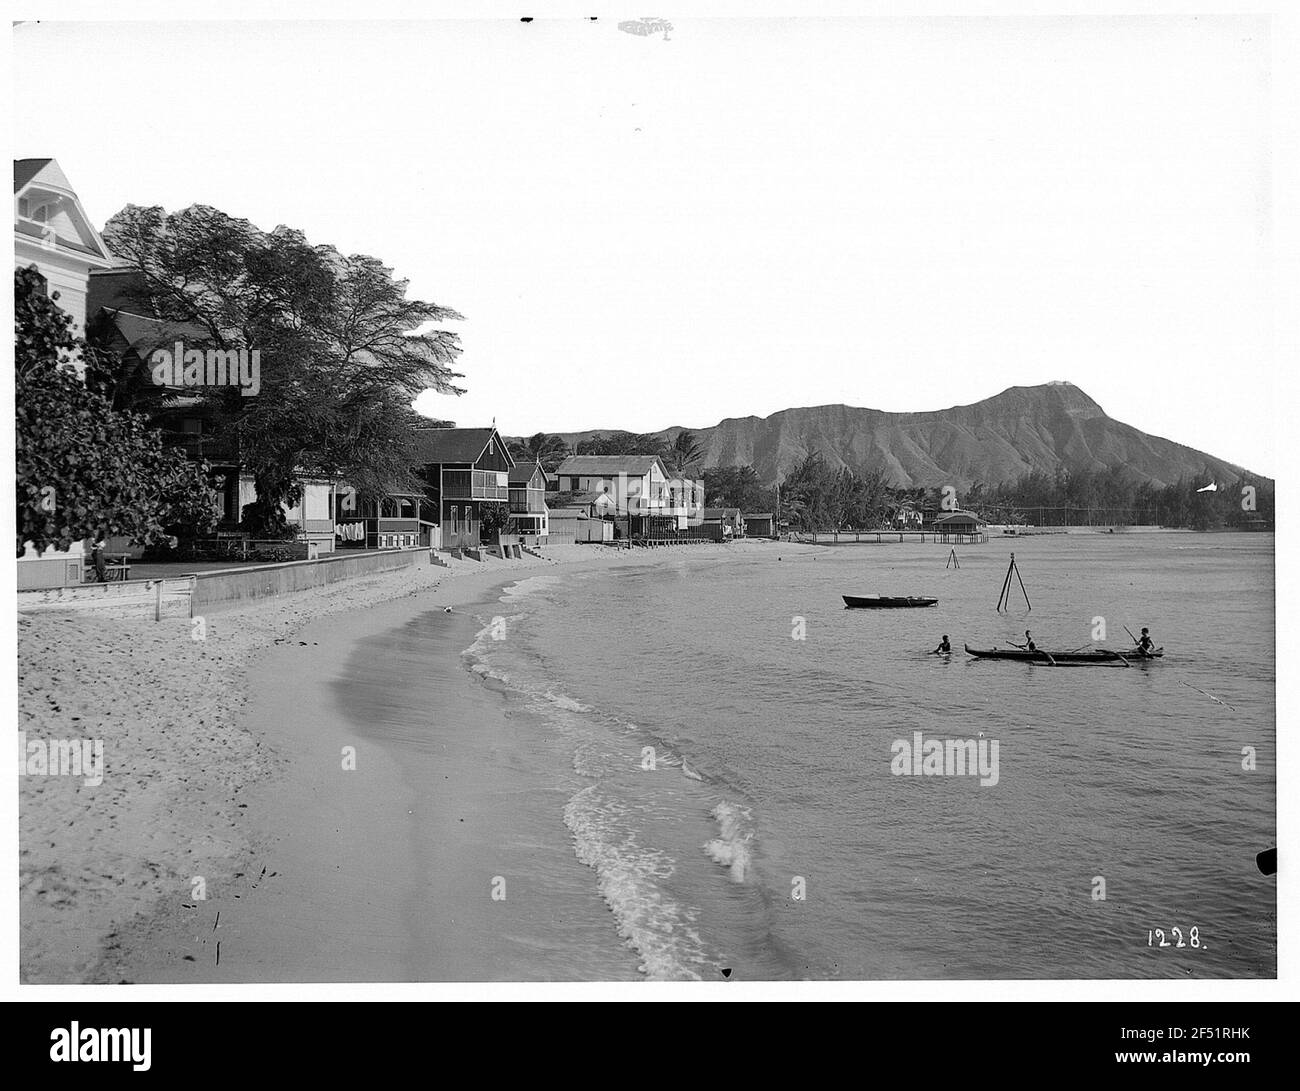 Waikiki, Honolulu (Hawaii). Beach with bathers and boats. View to the ...